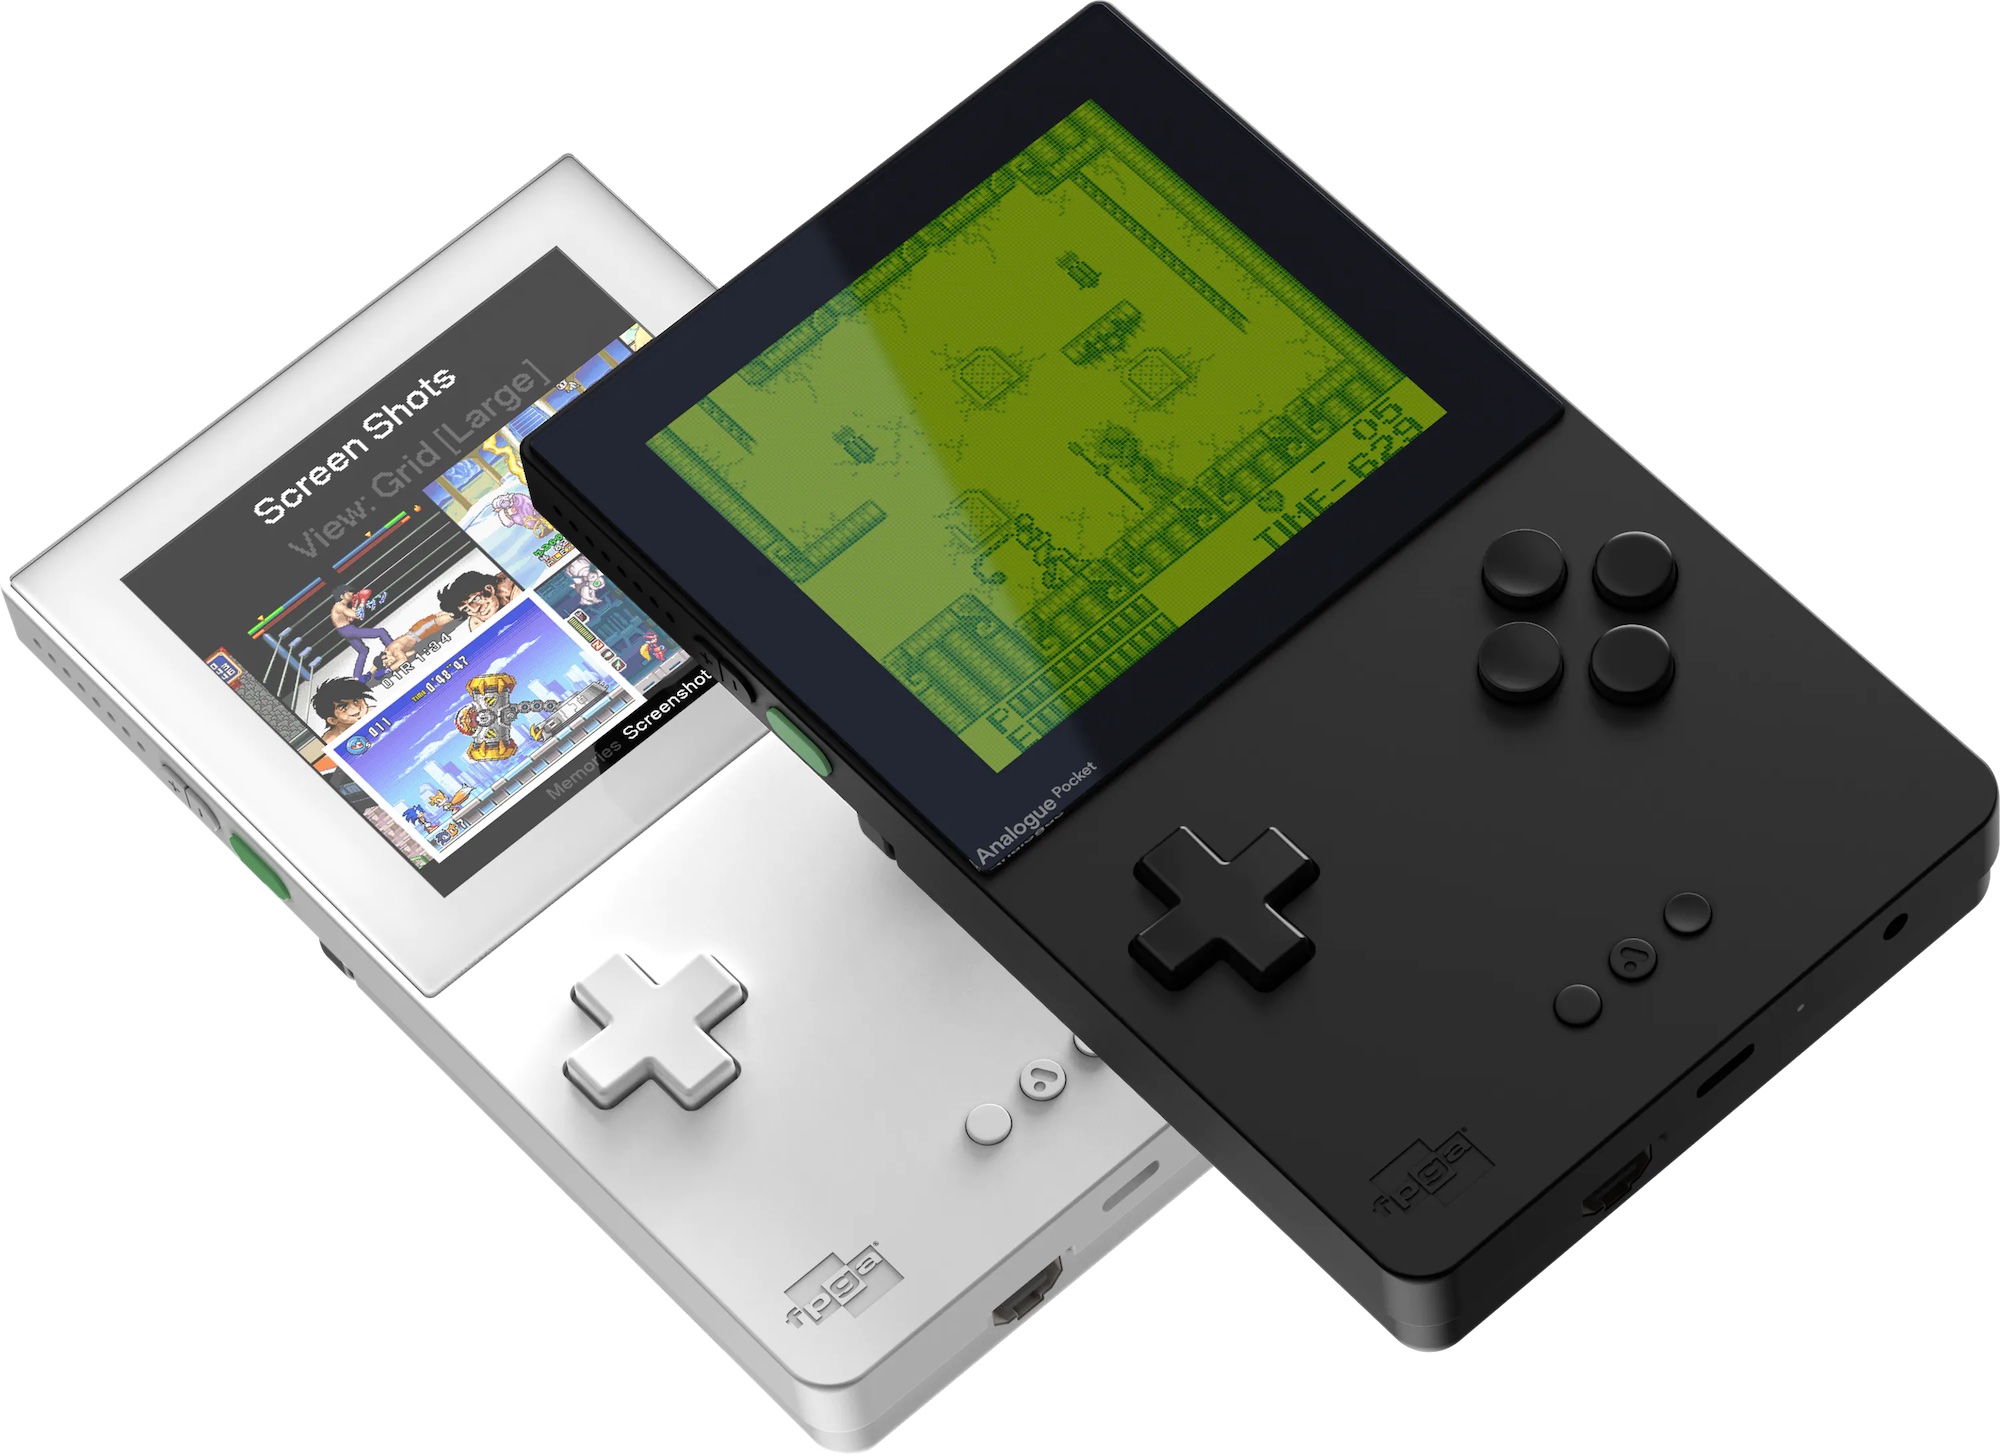 Hardware Classics: Game Boy Pocket